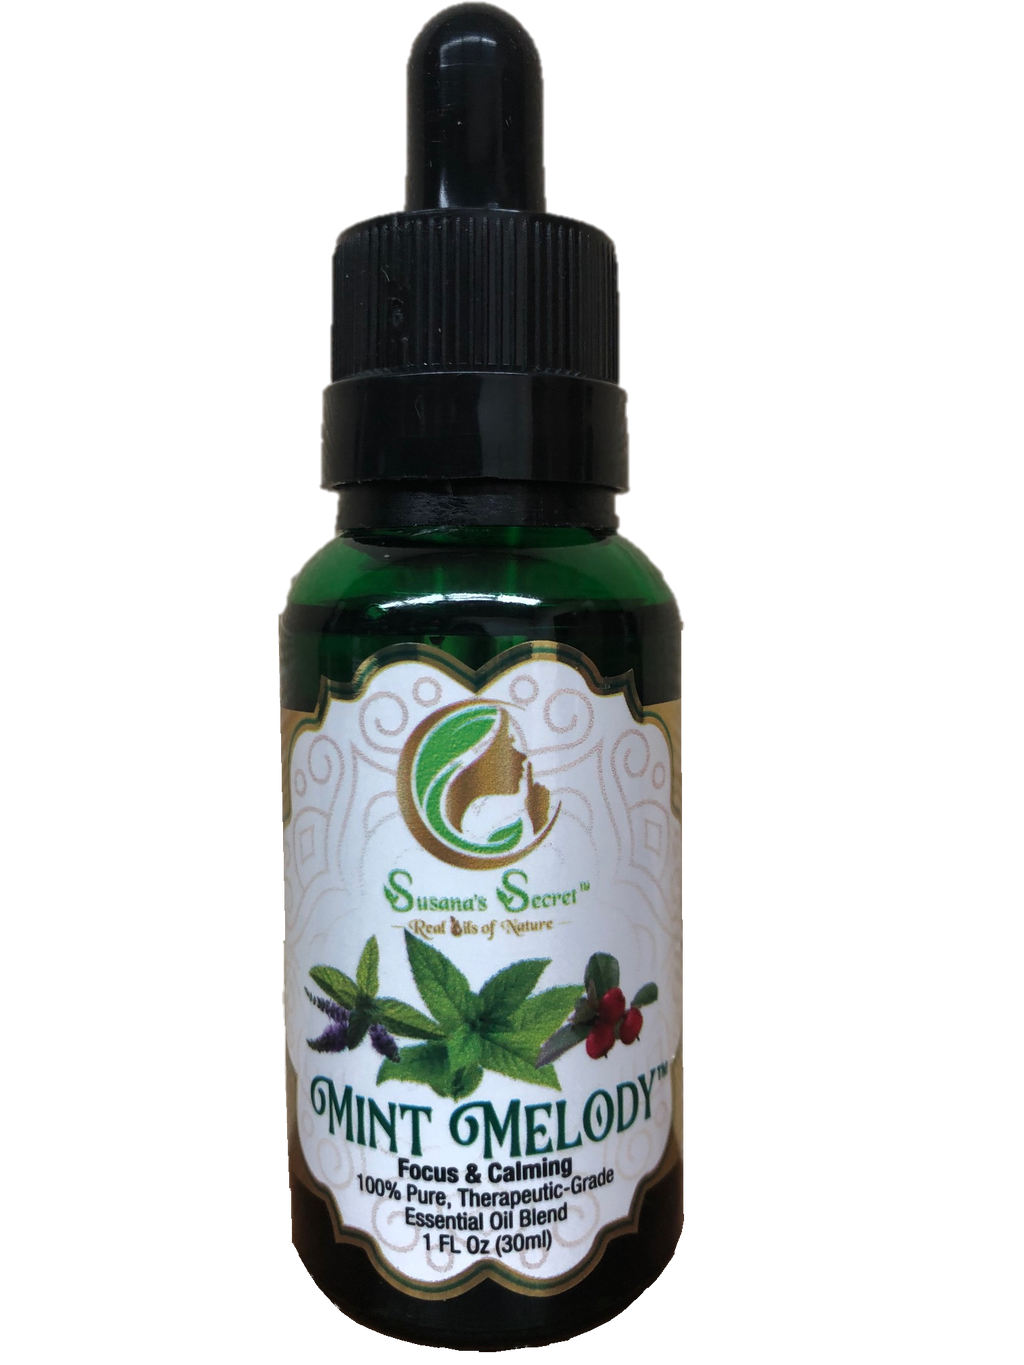 "MINT MELODY"- Focus & Calming- Essential Oil Blend, 100% PURE, Therapeutic-Grade, 1 FL Oz/30 ml, Glass bottle w/ dropper pipette